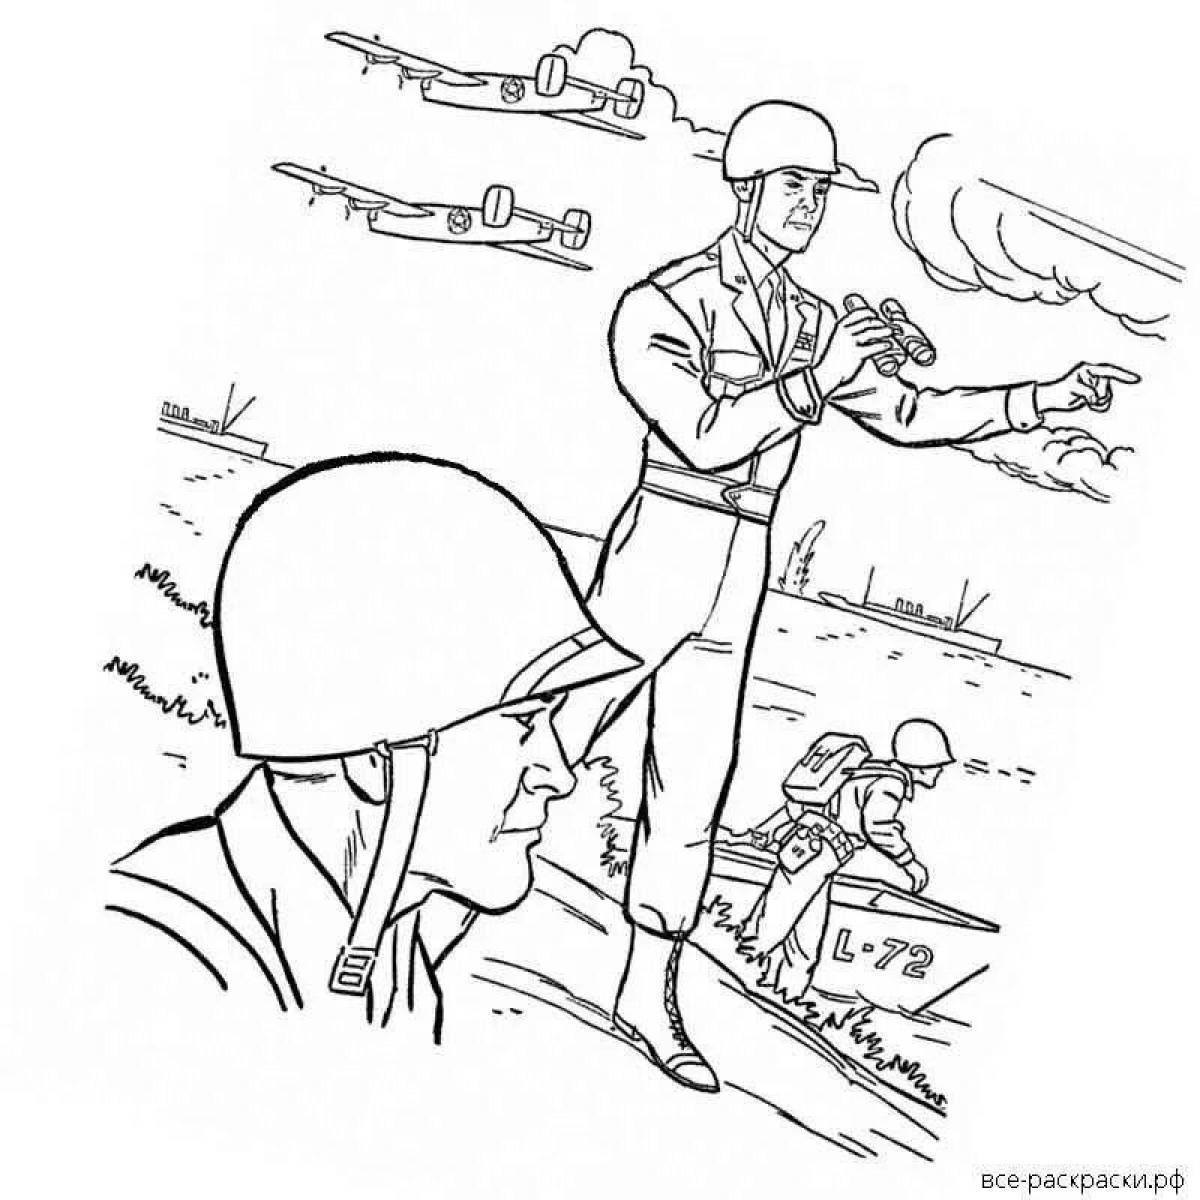 War drawing #4